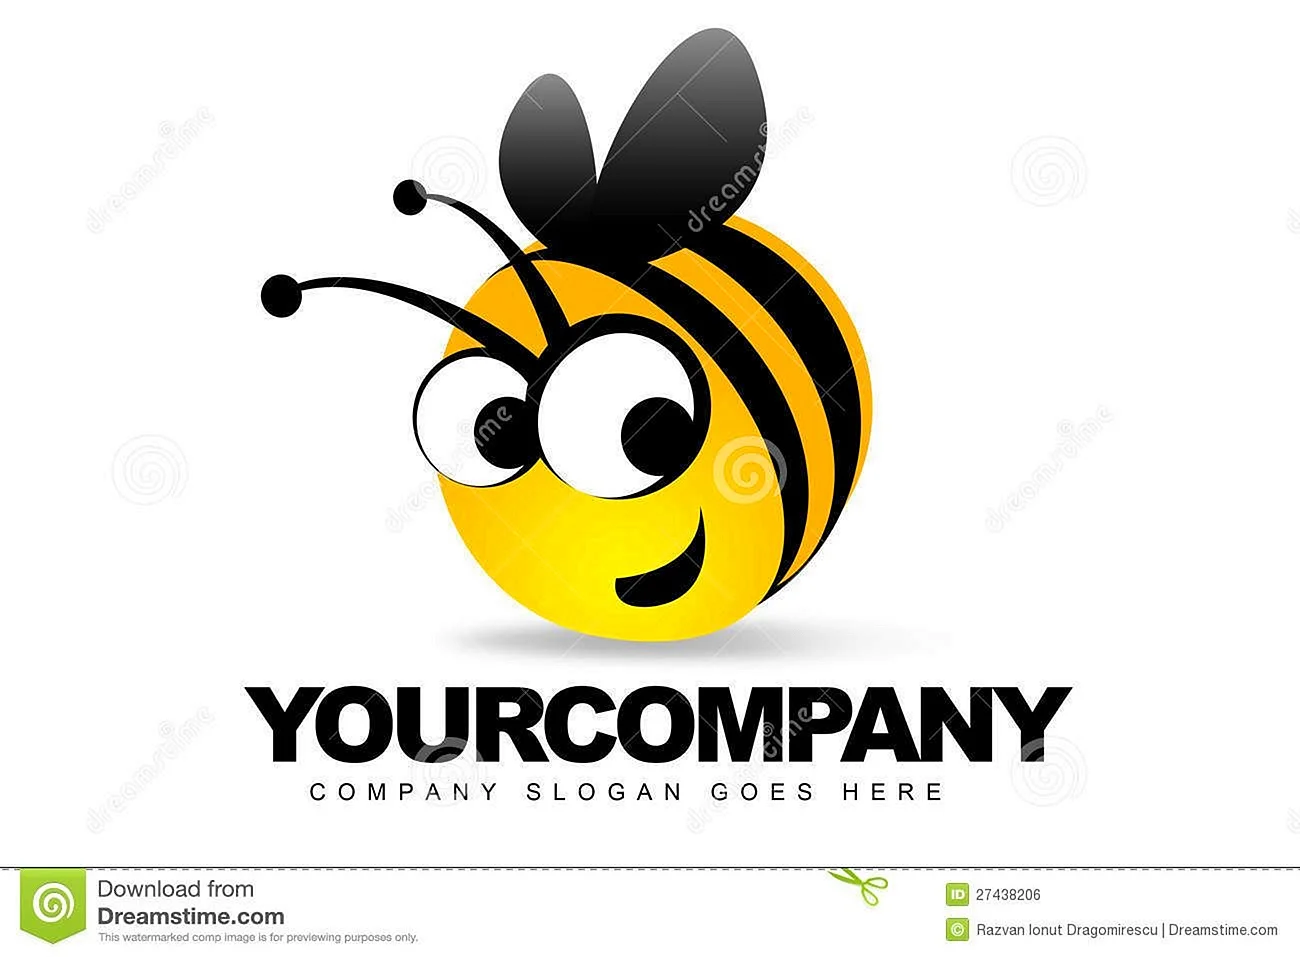 Логотип компании Пчелка